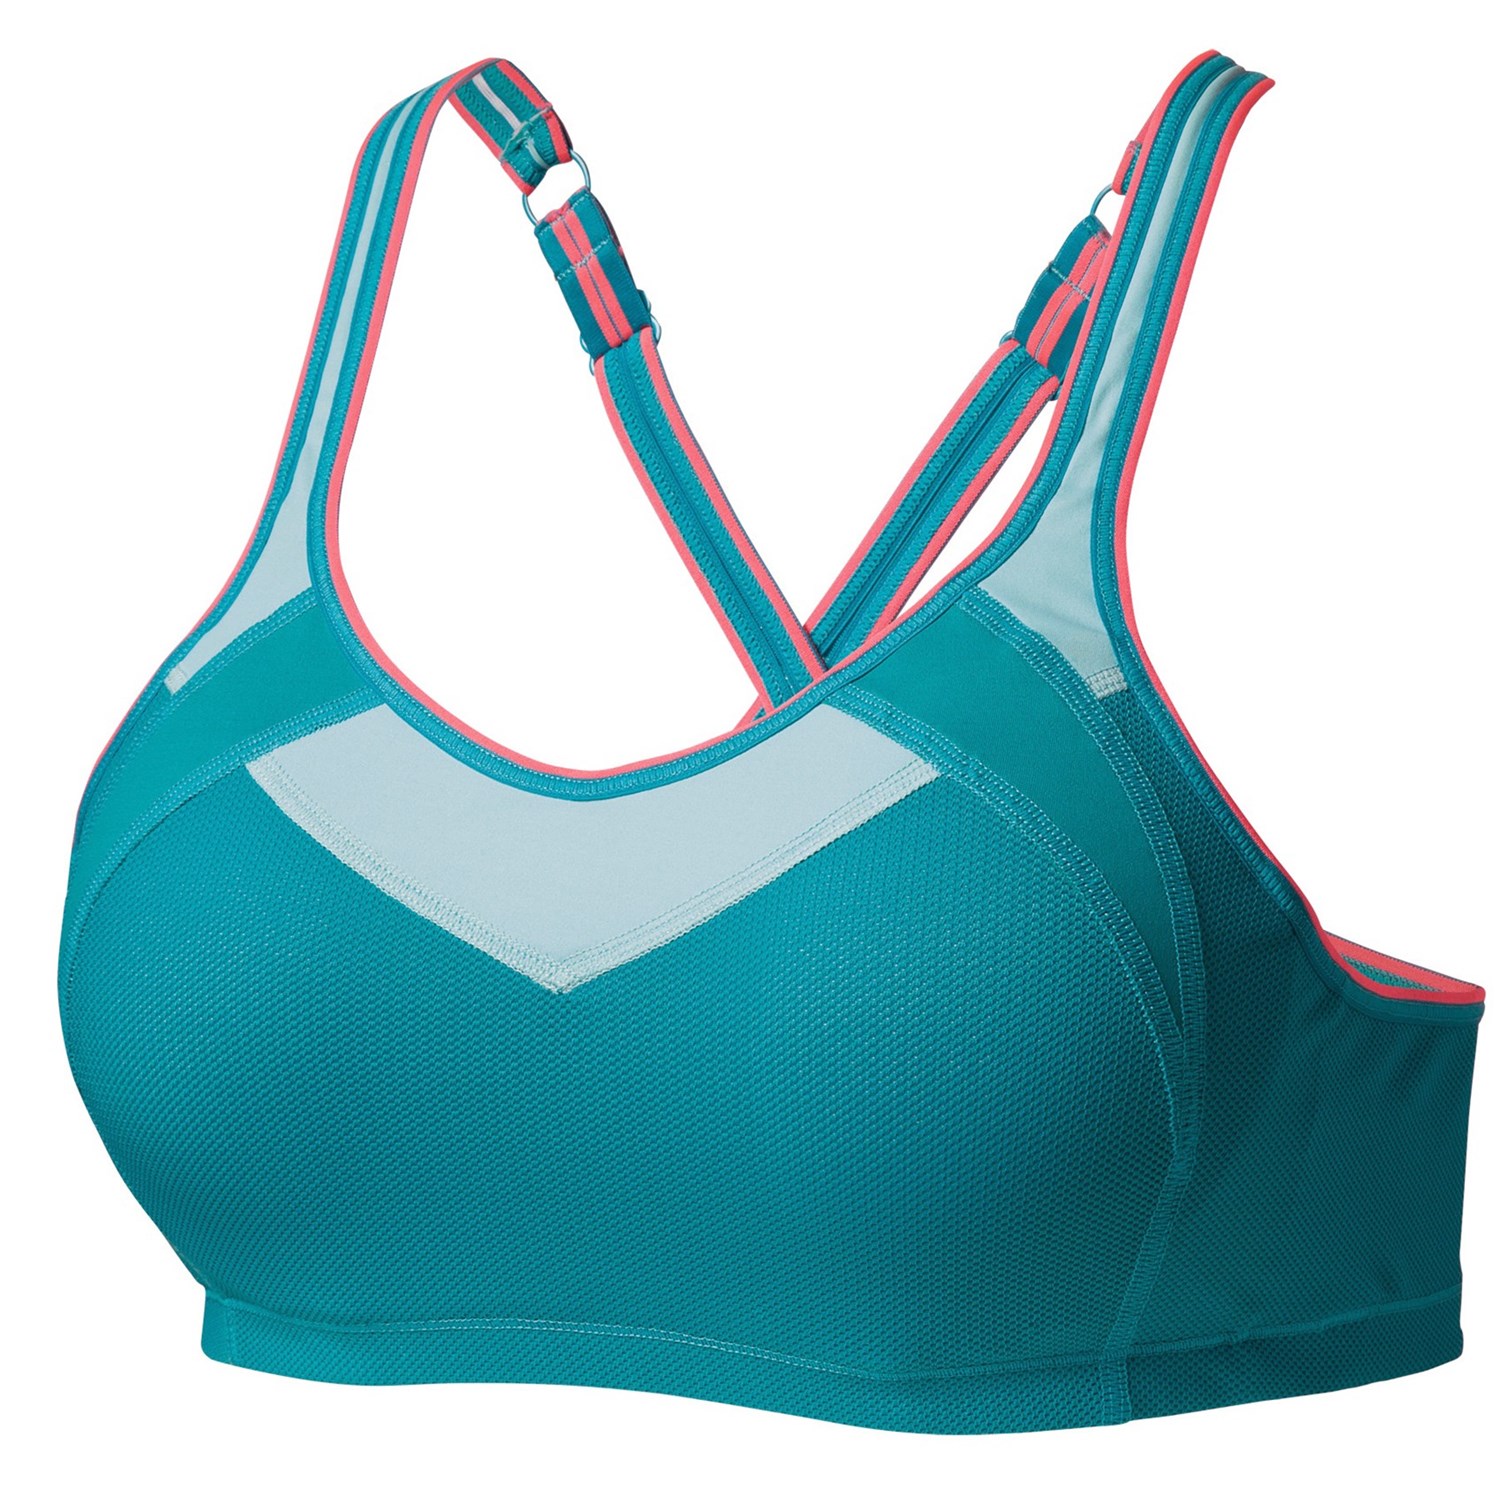 Turquoise sports bra free image download